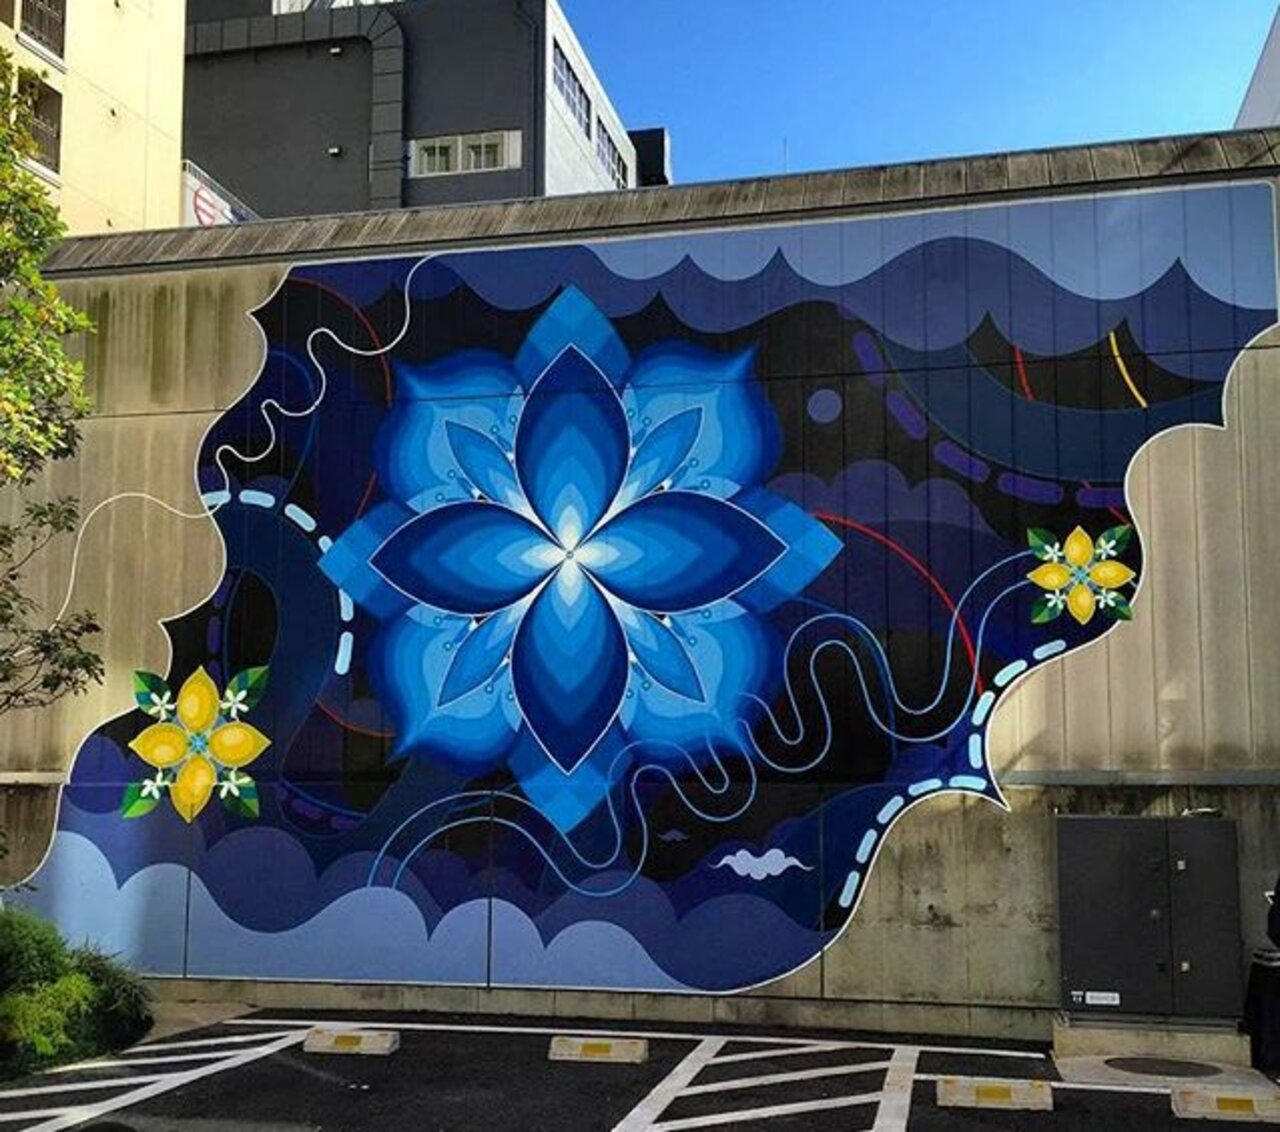 New Street Art by htzk, kami_htzk + sasu_lyri 

#art #graffiti #mural #streetart https://t.co/s1cAES1tO4